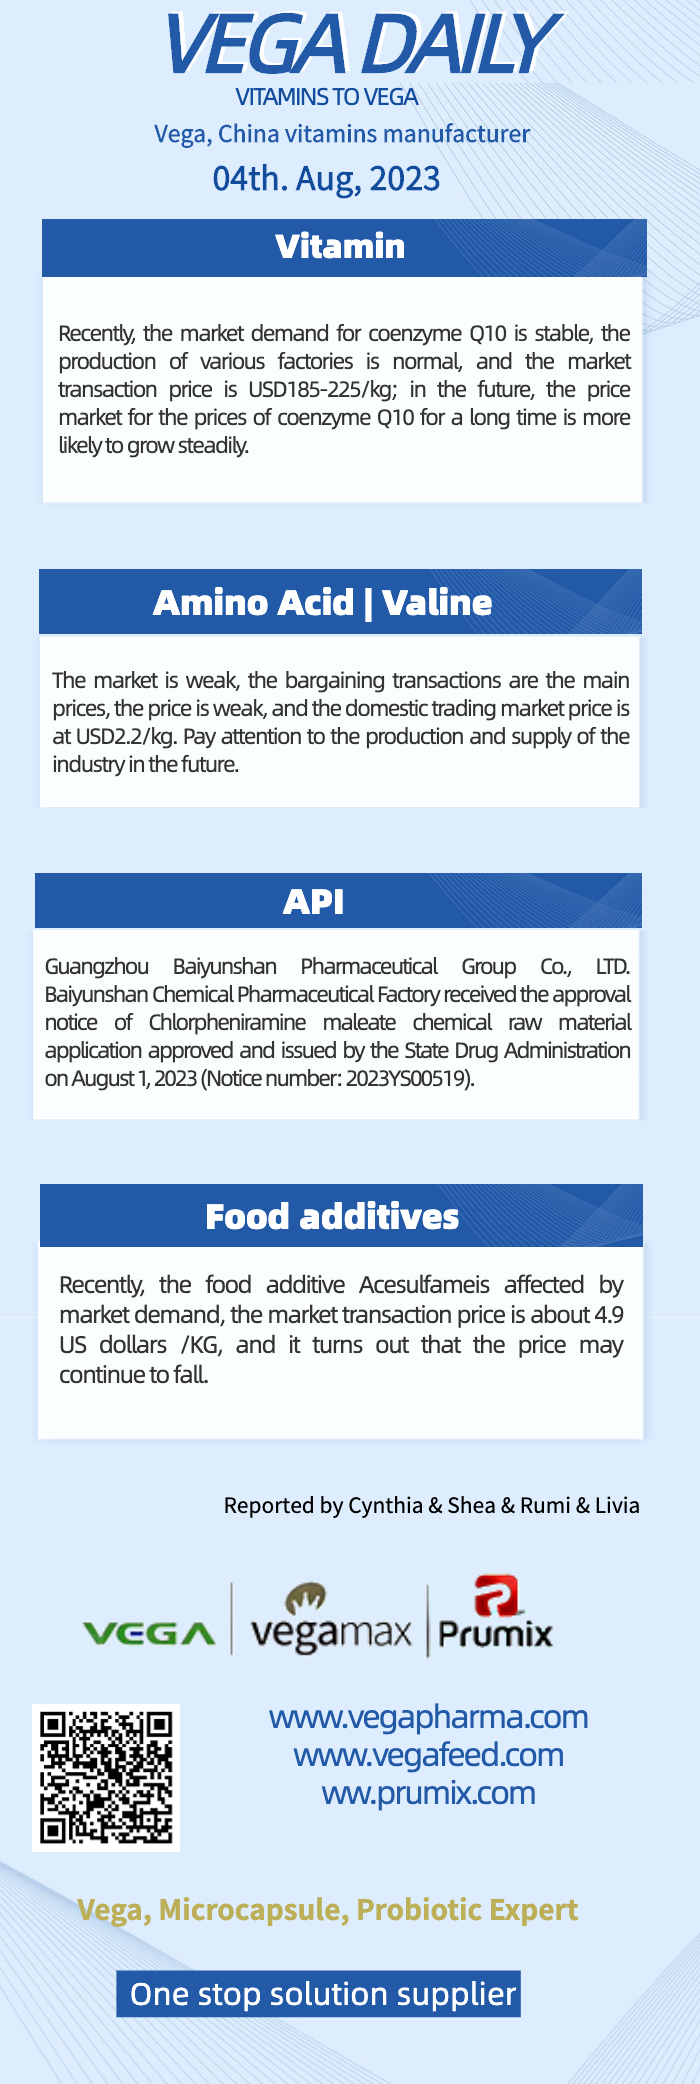 Vega Daily Dated on August  4th 2023 Vitamin Valine API Food additives.jpg